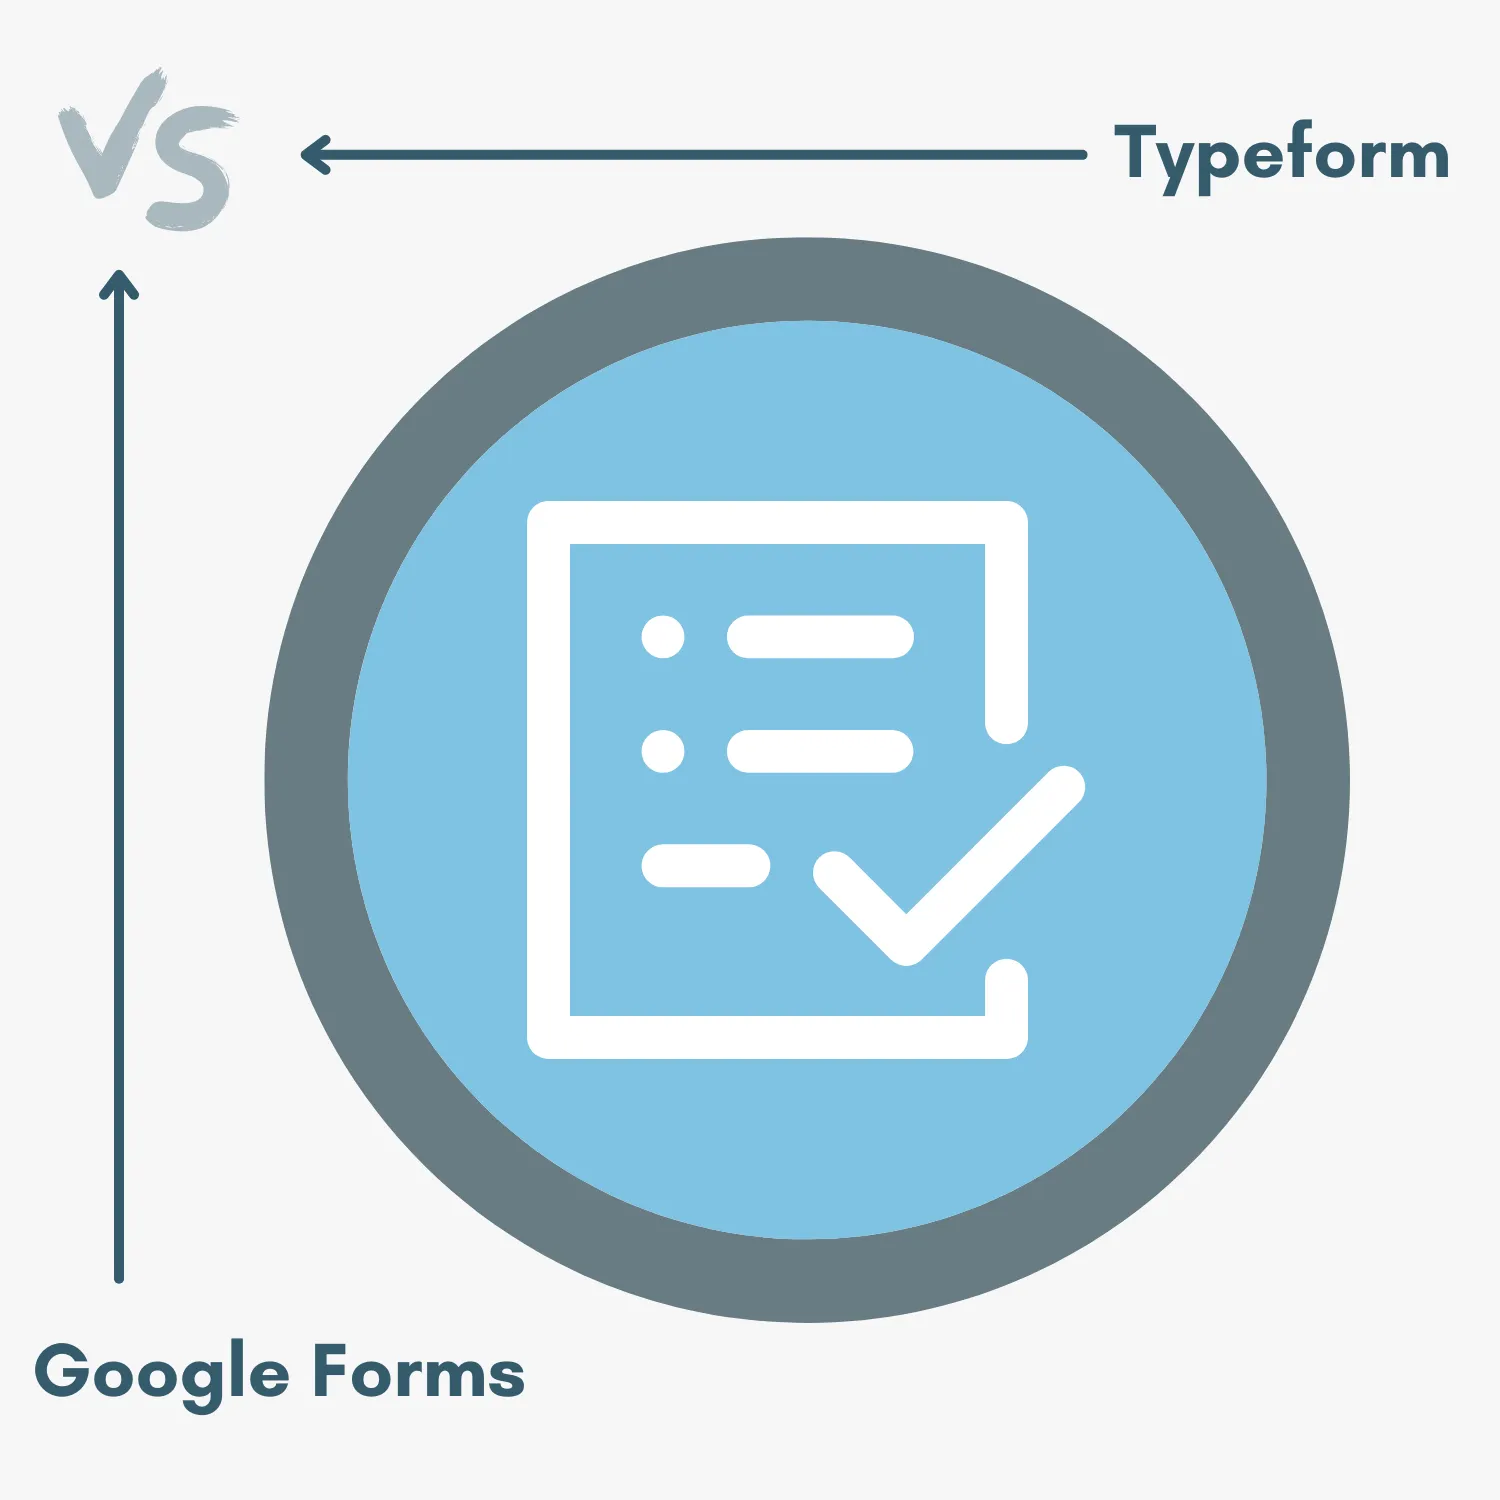 Typeform vs Google Forms